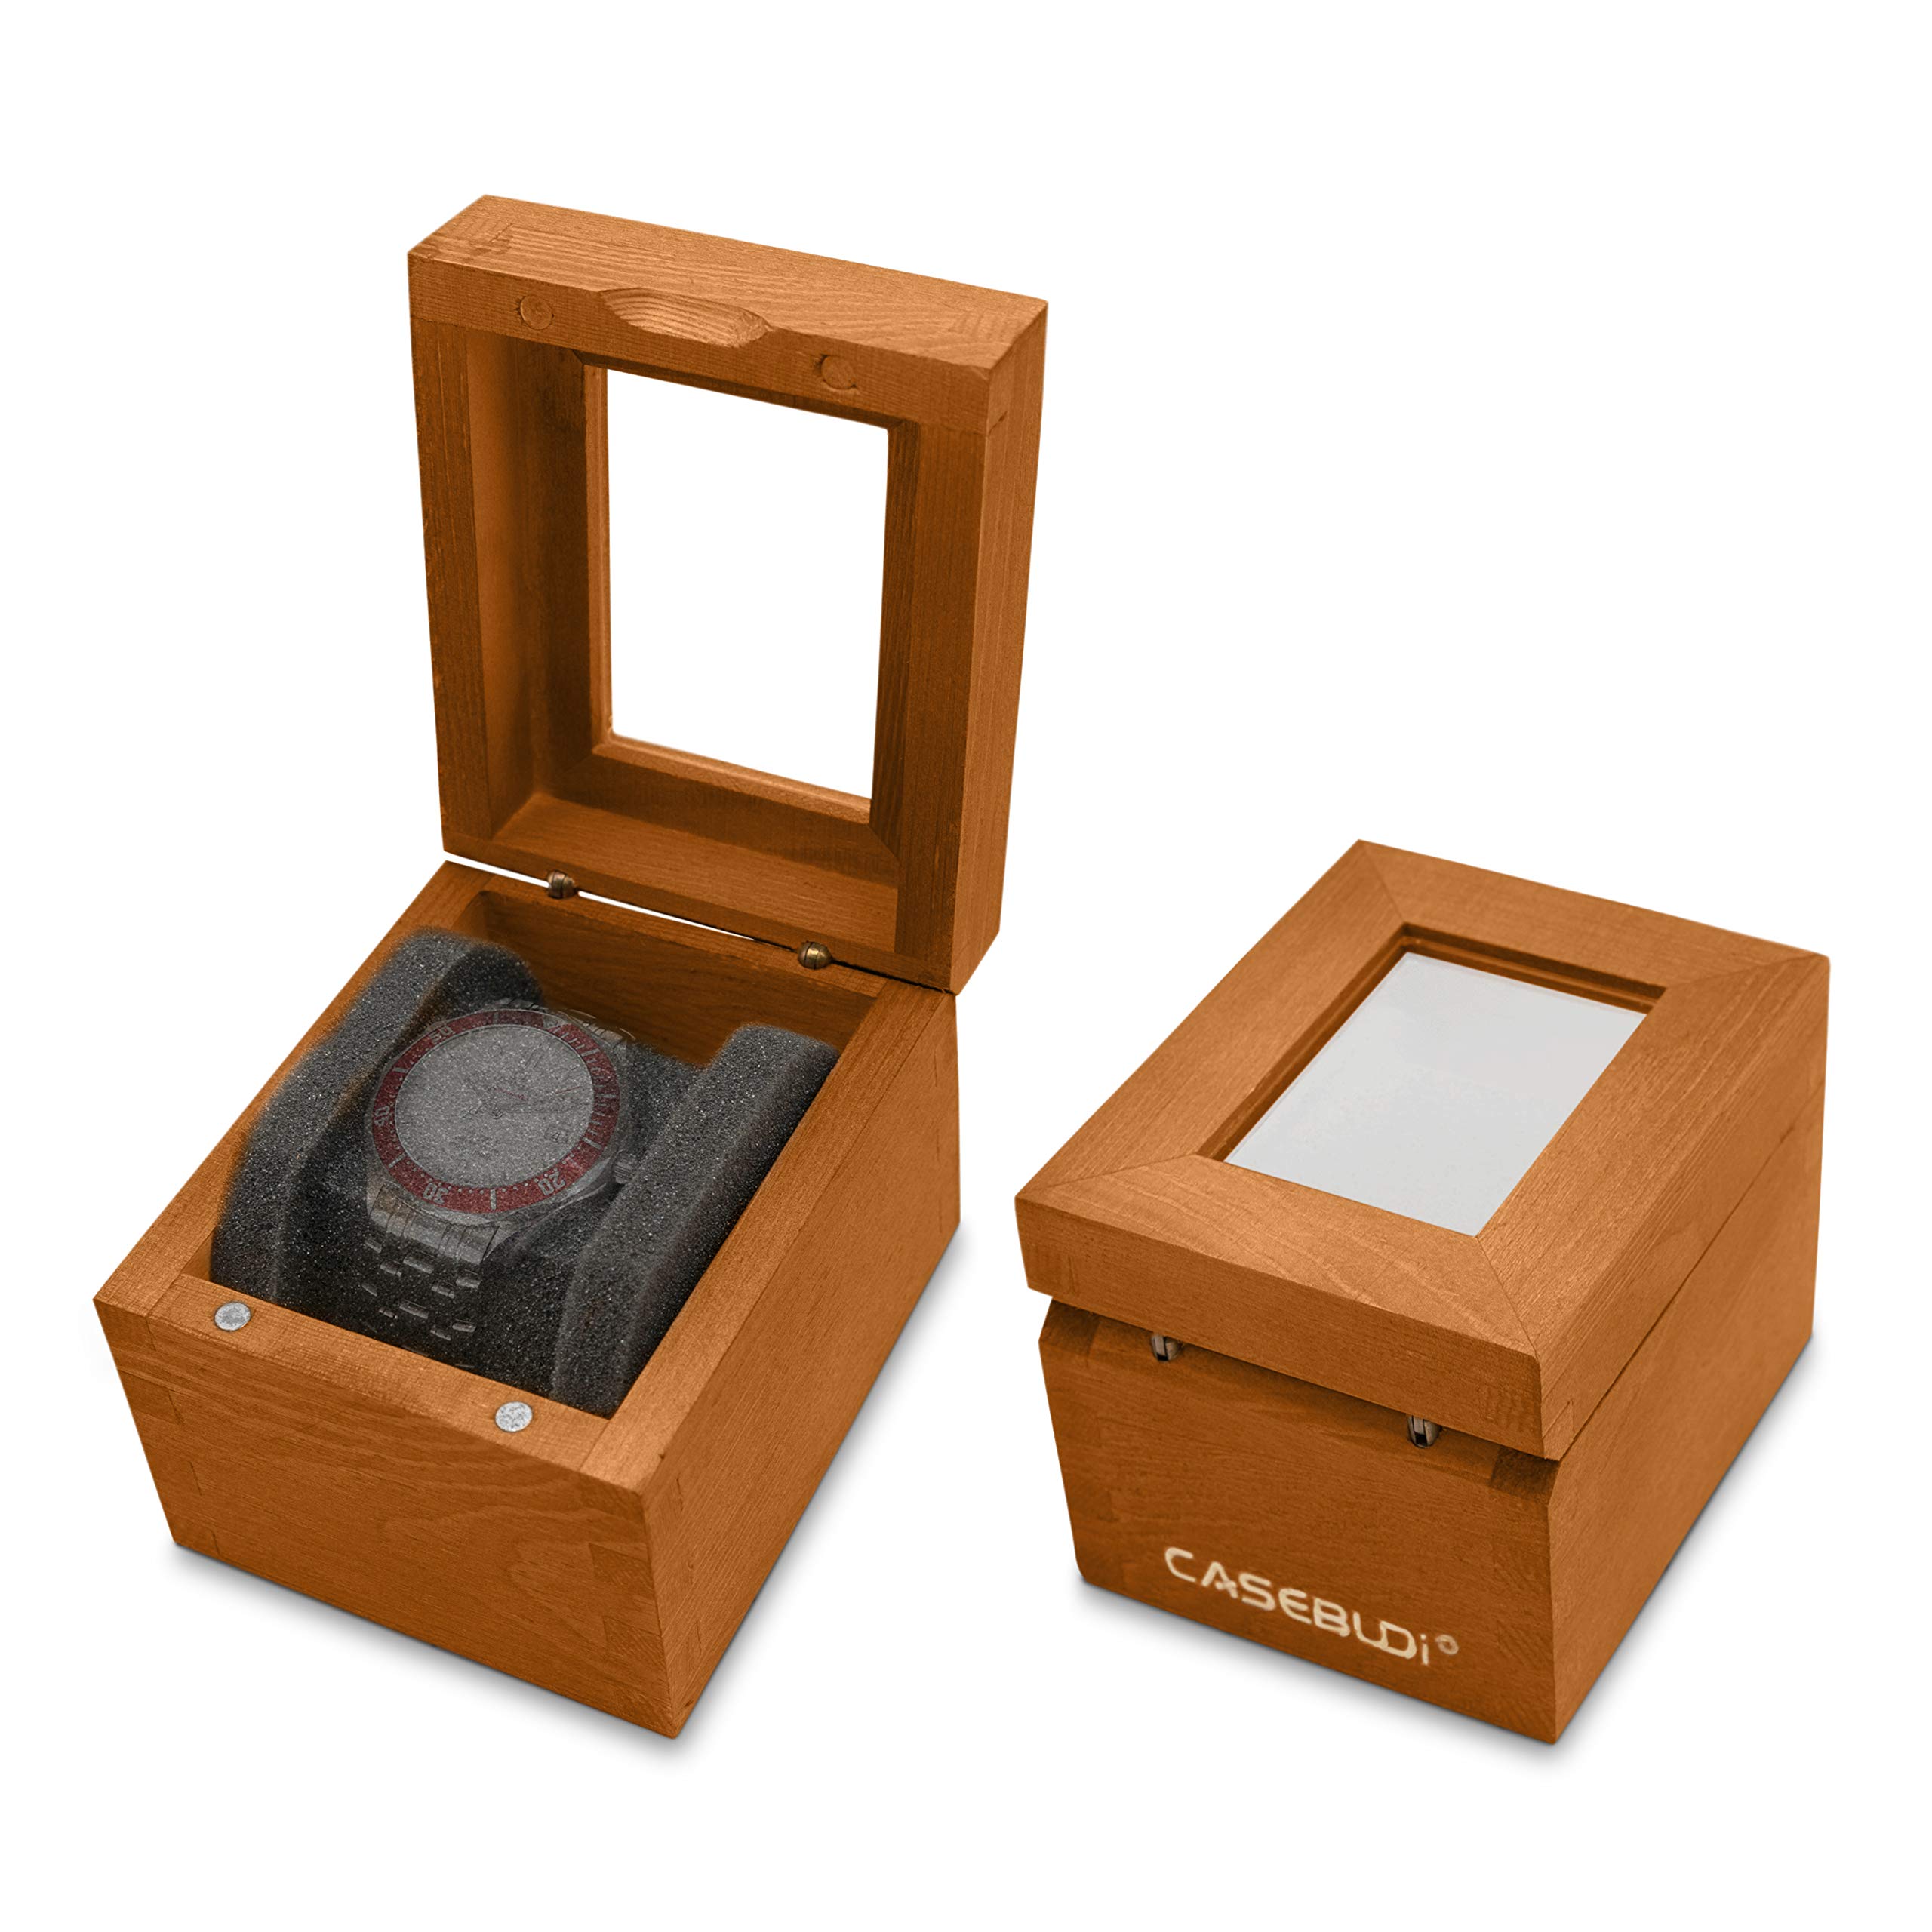 CASEBUDi Single Wood Watch Display and Gift Box (Sienna)